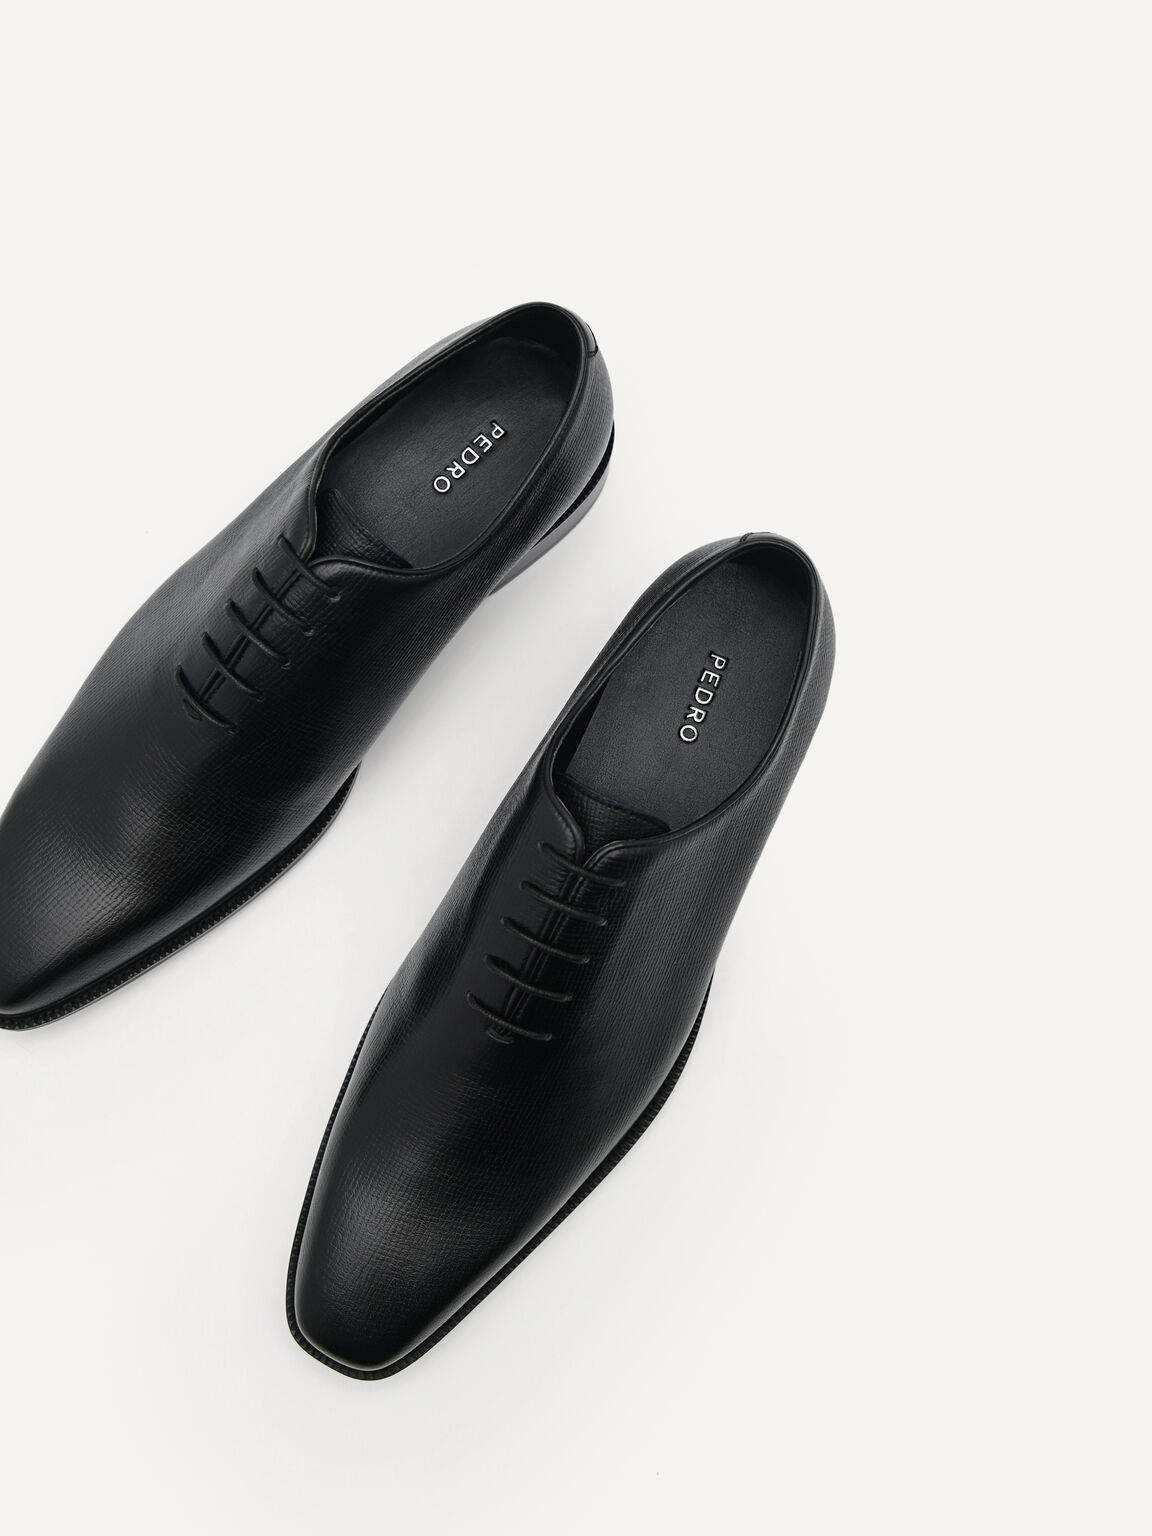 Brando Leather Oxford Shoes, Black